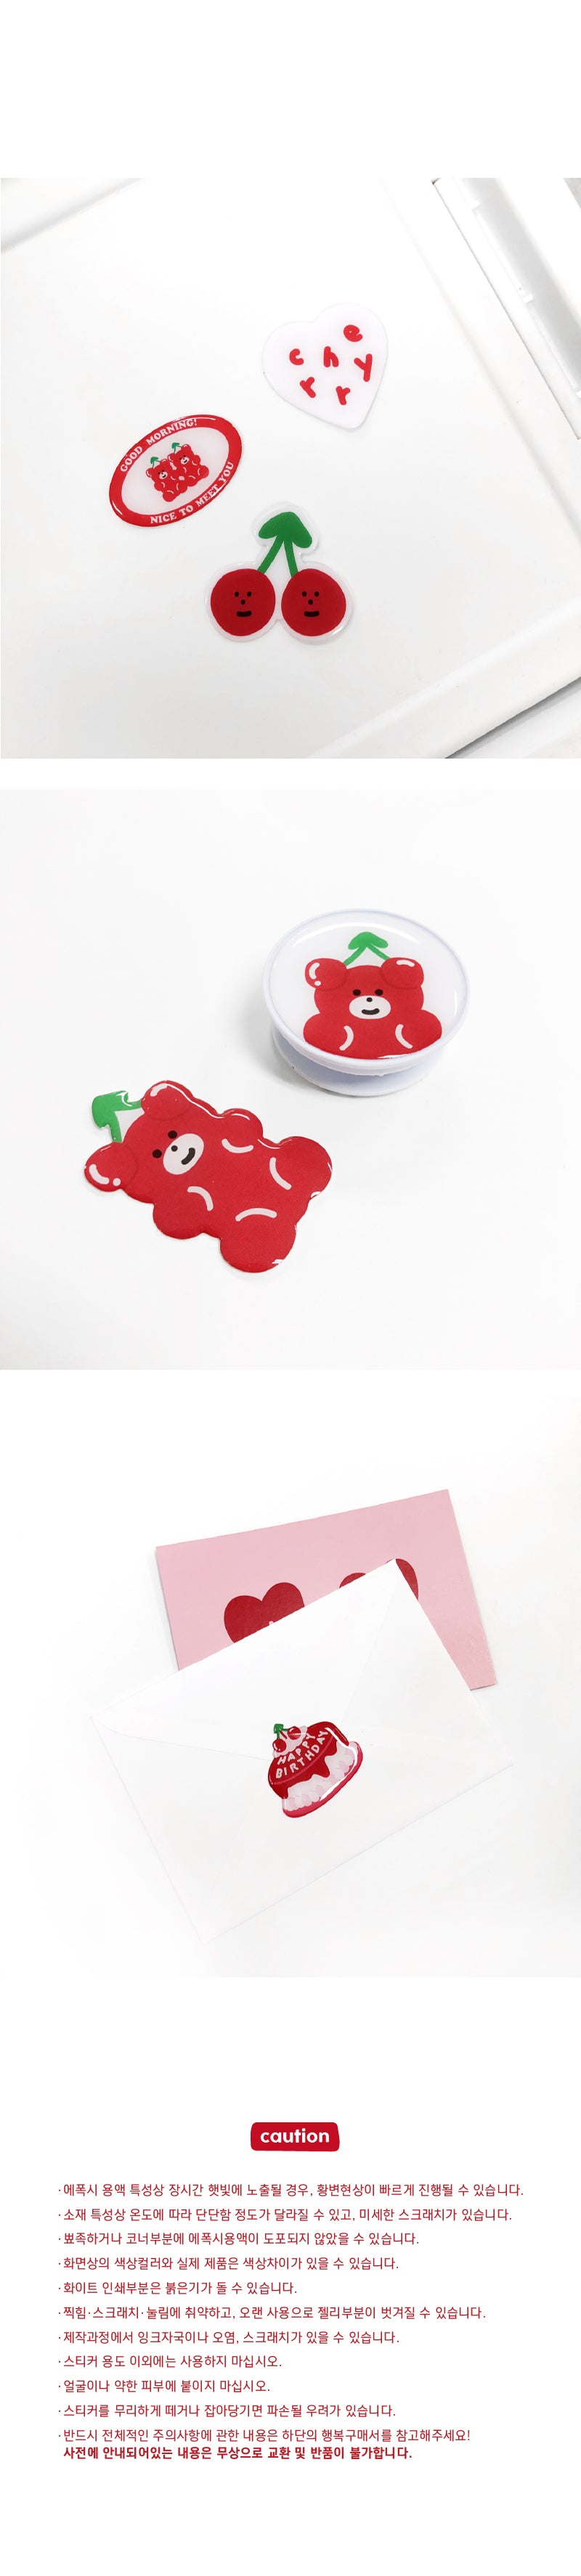 Epoxy Sticker Cherry